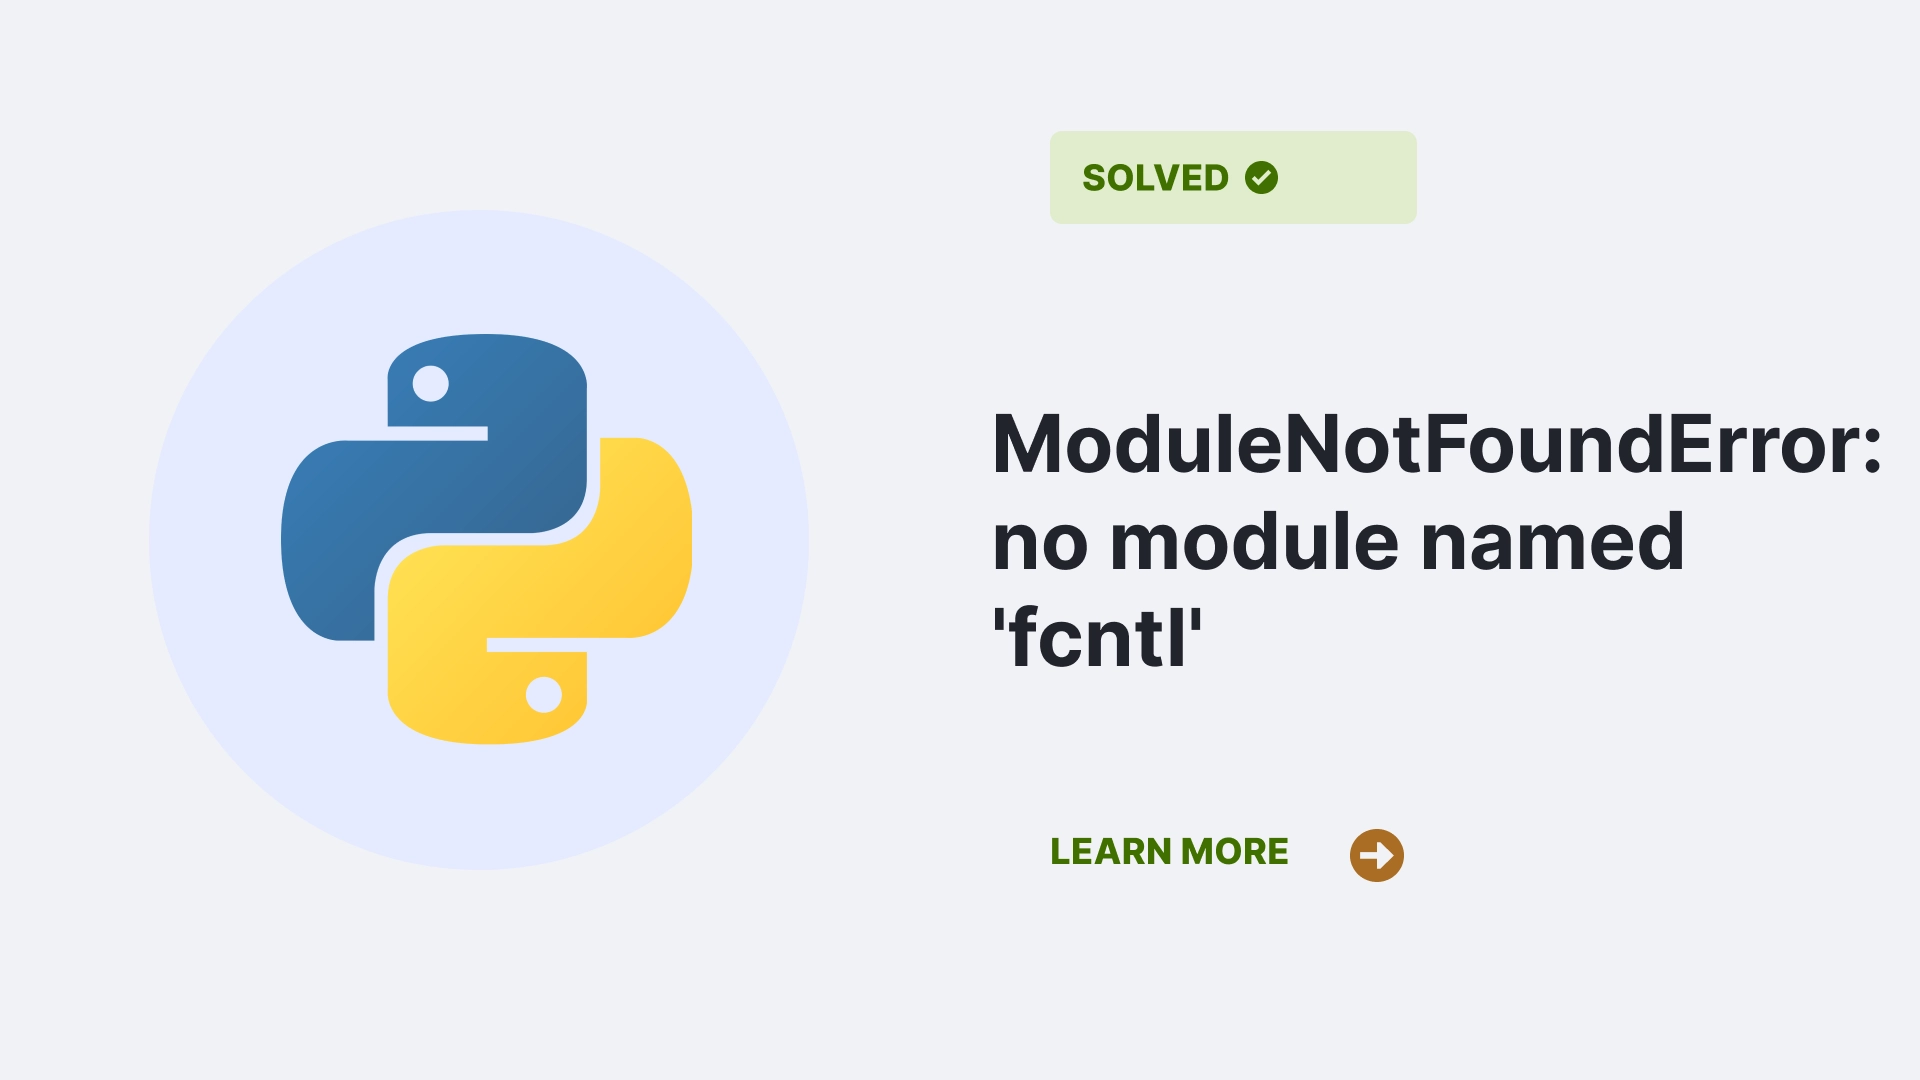 ModuleNotFoundError: no module named 'fcntl'